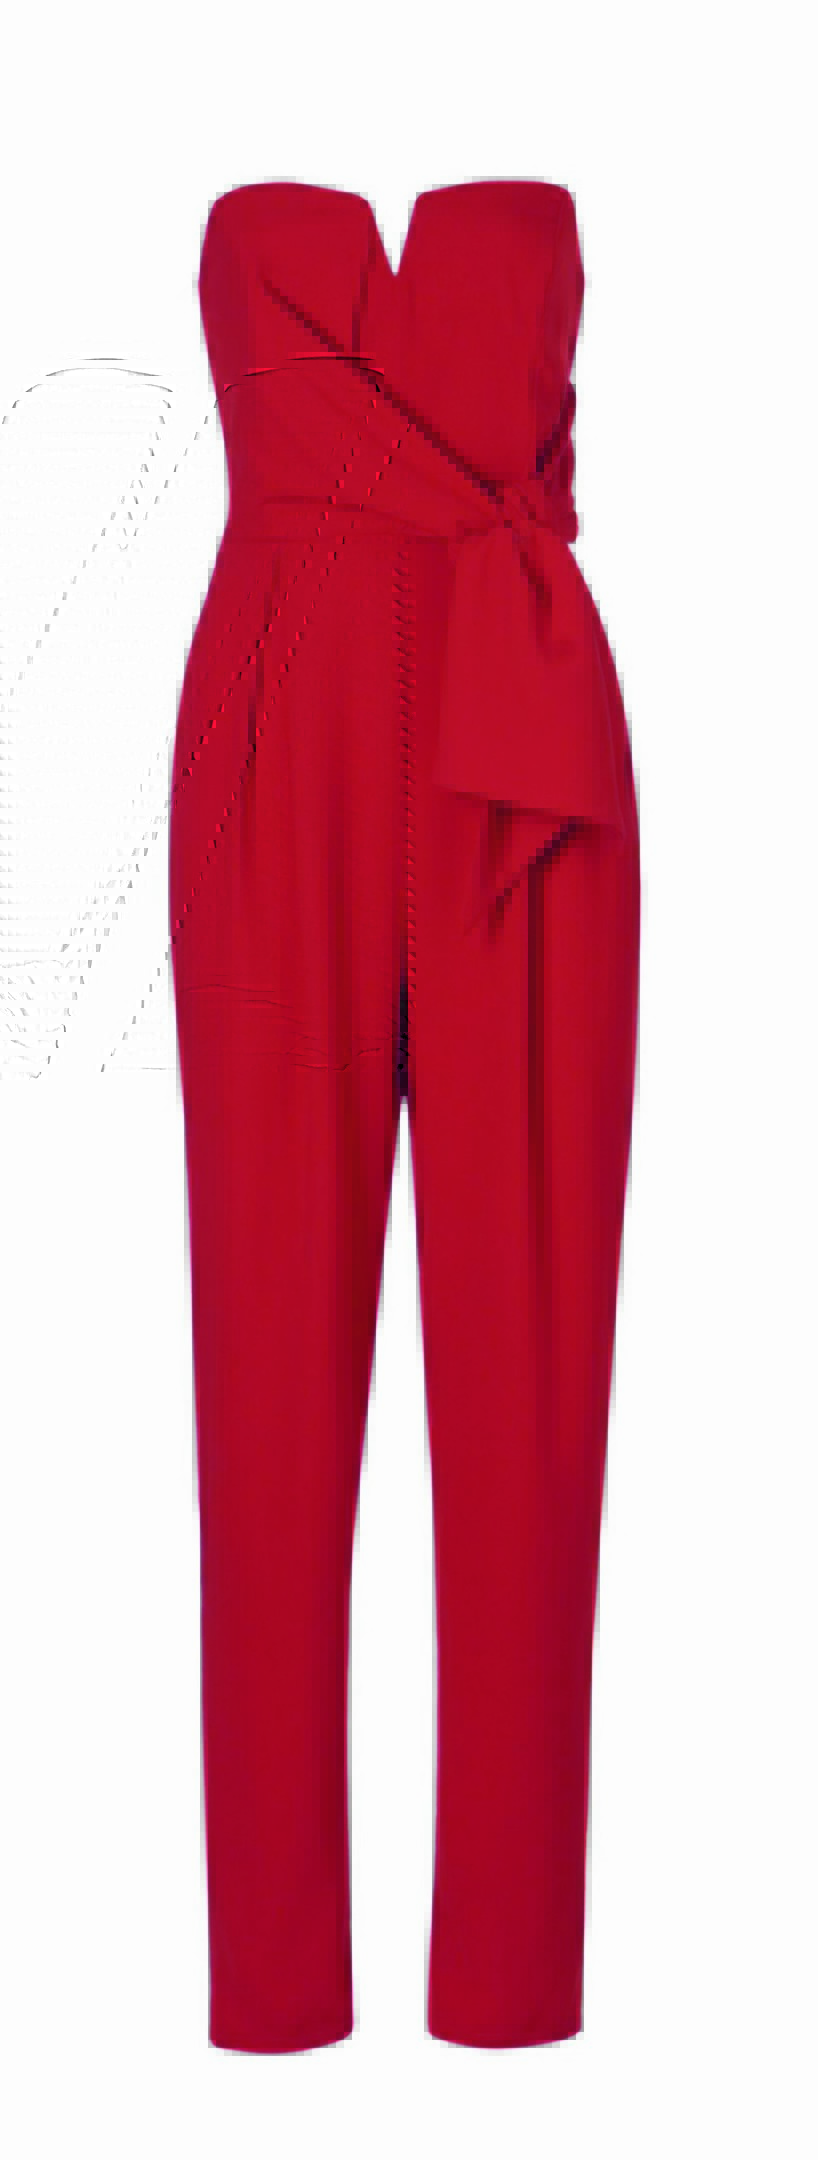 Asda red jumpsuit, £20